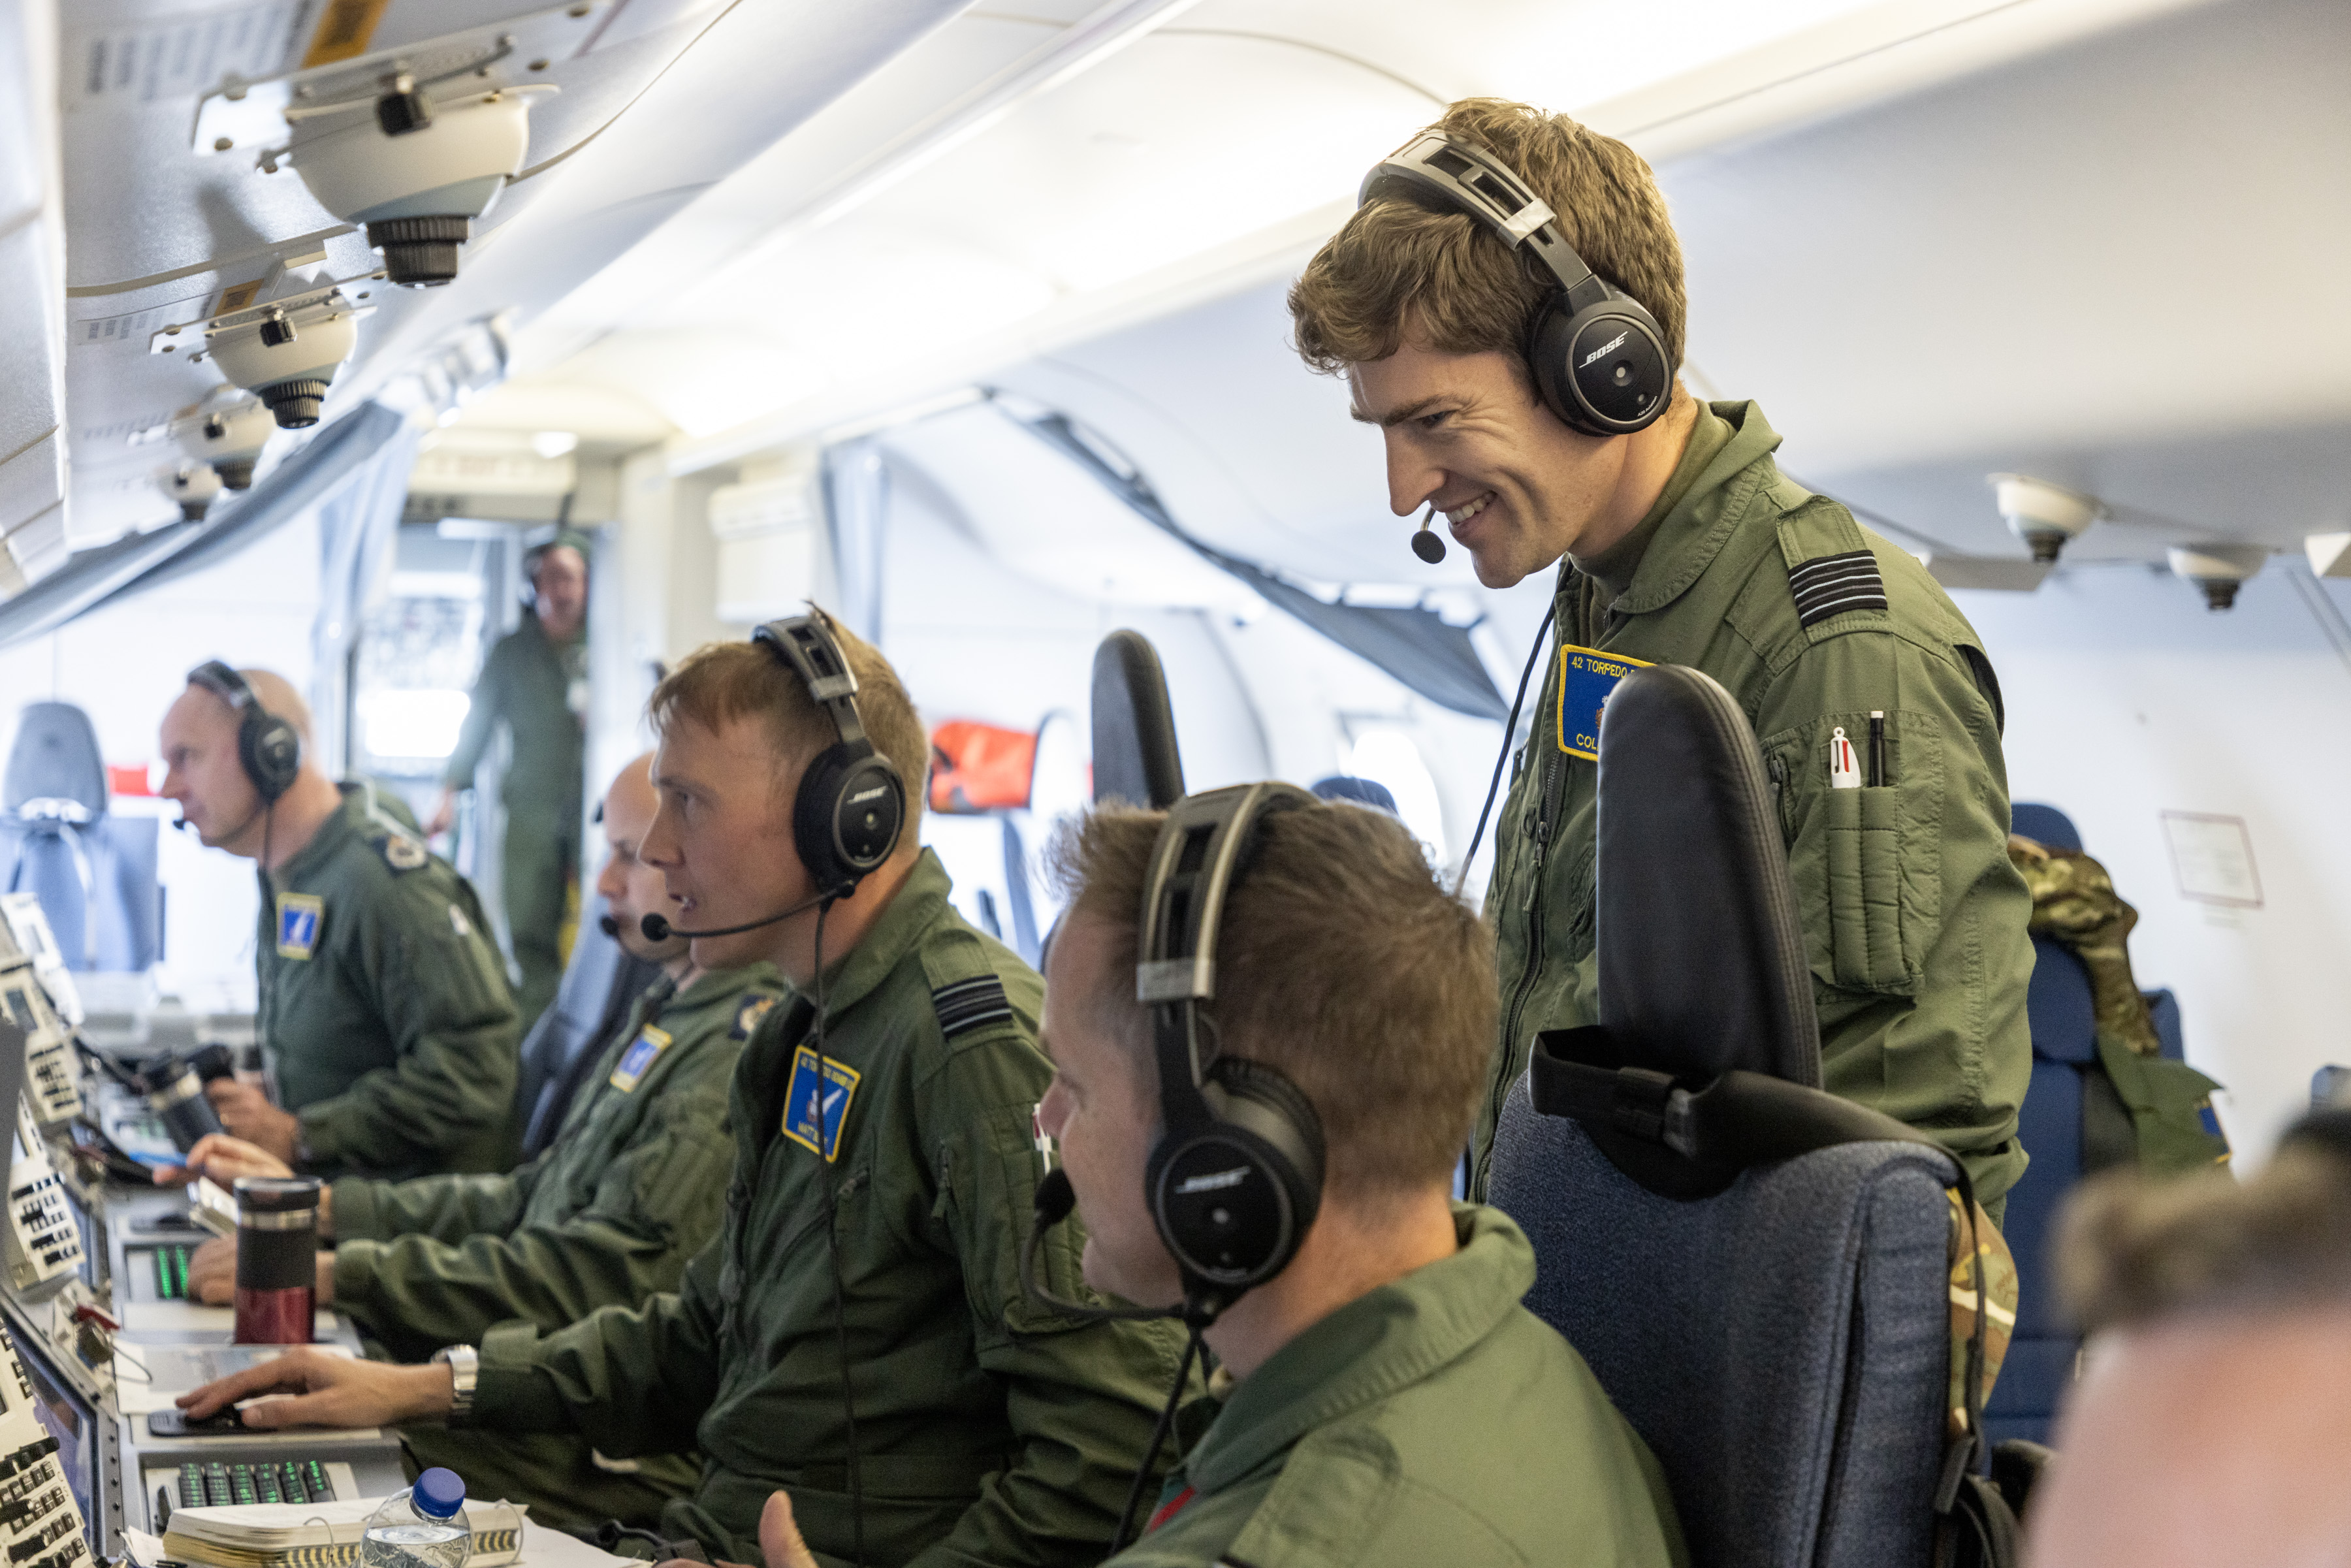 RAF aviators working onboard the posiedon